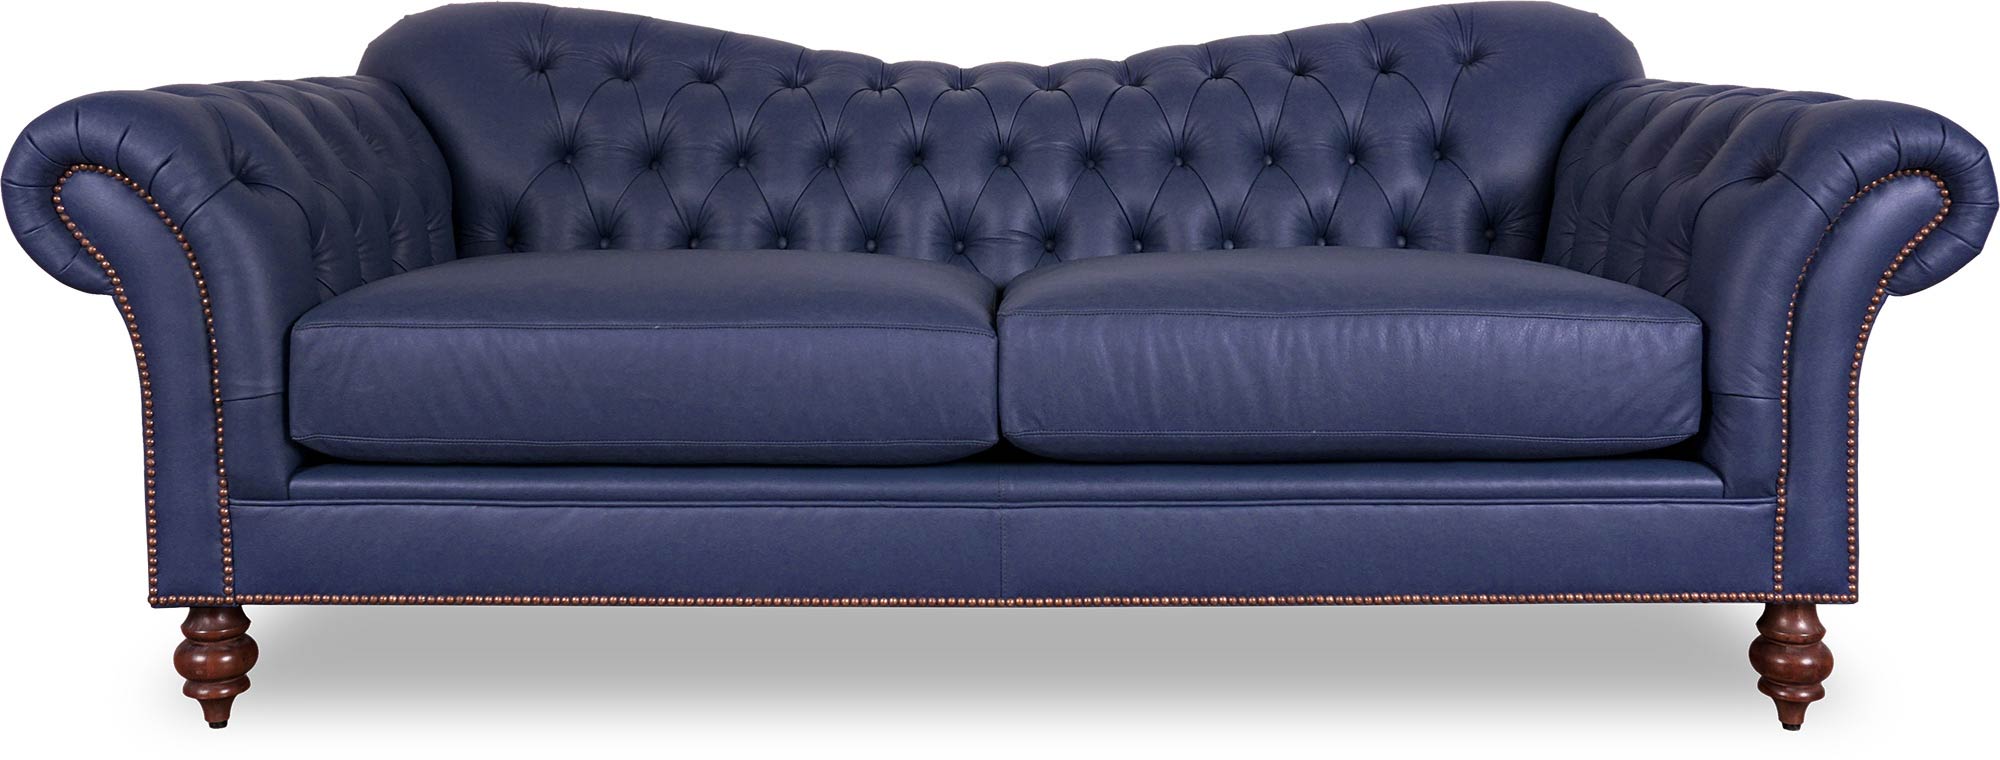 91 Watson sofa in Angelina Batik Blue leather